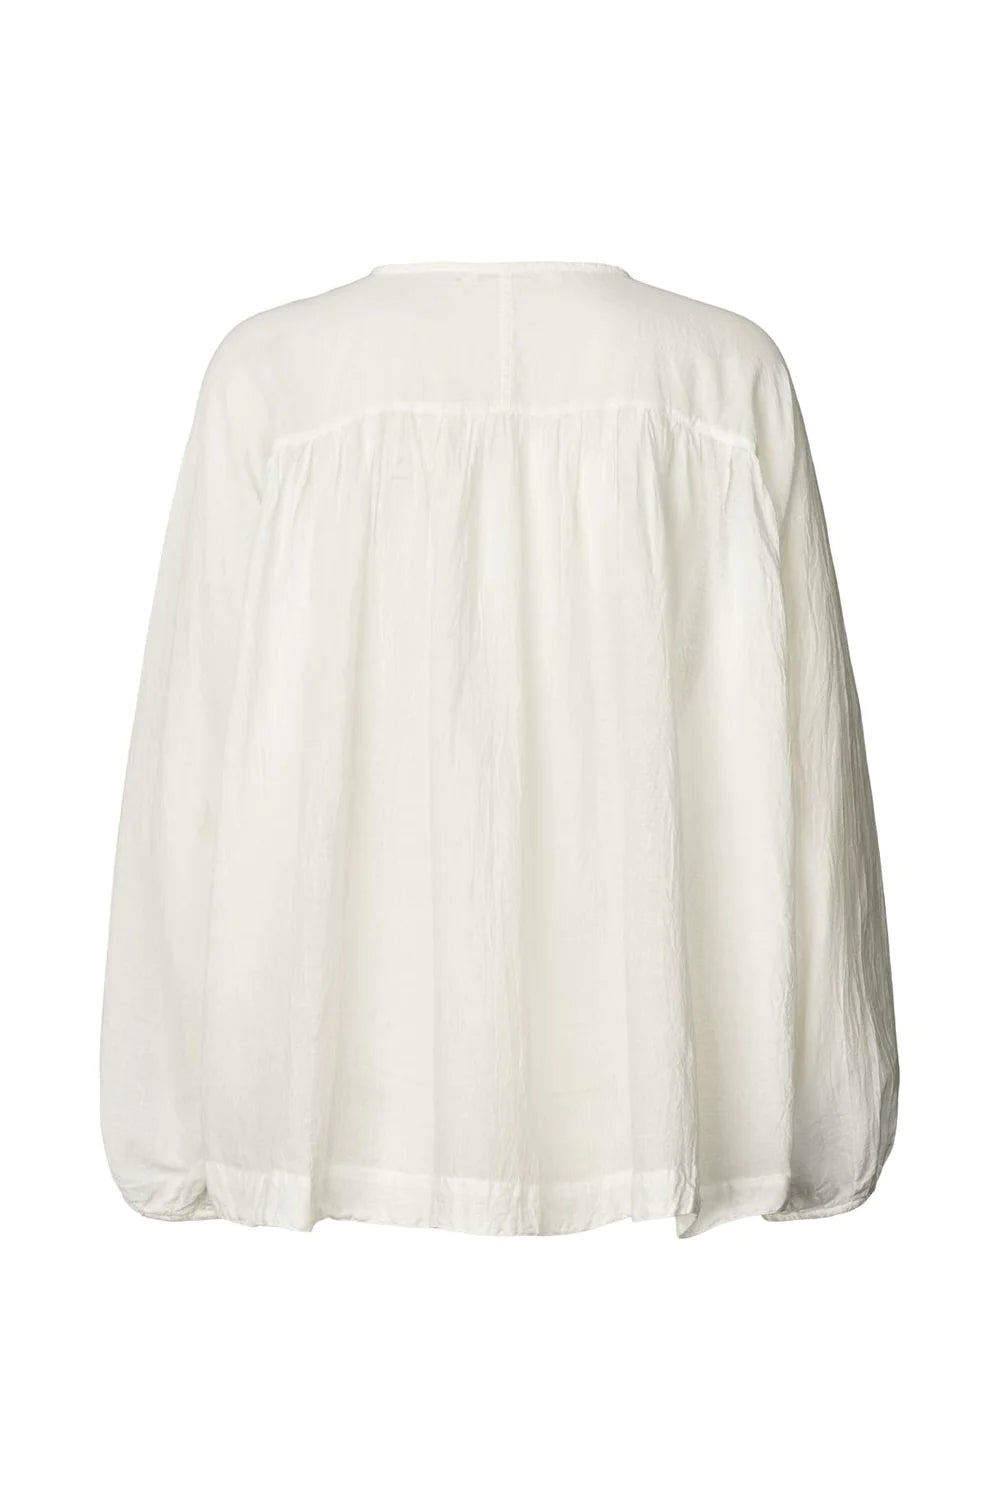 Roxy - Cotton blouse